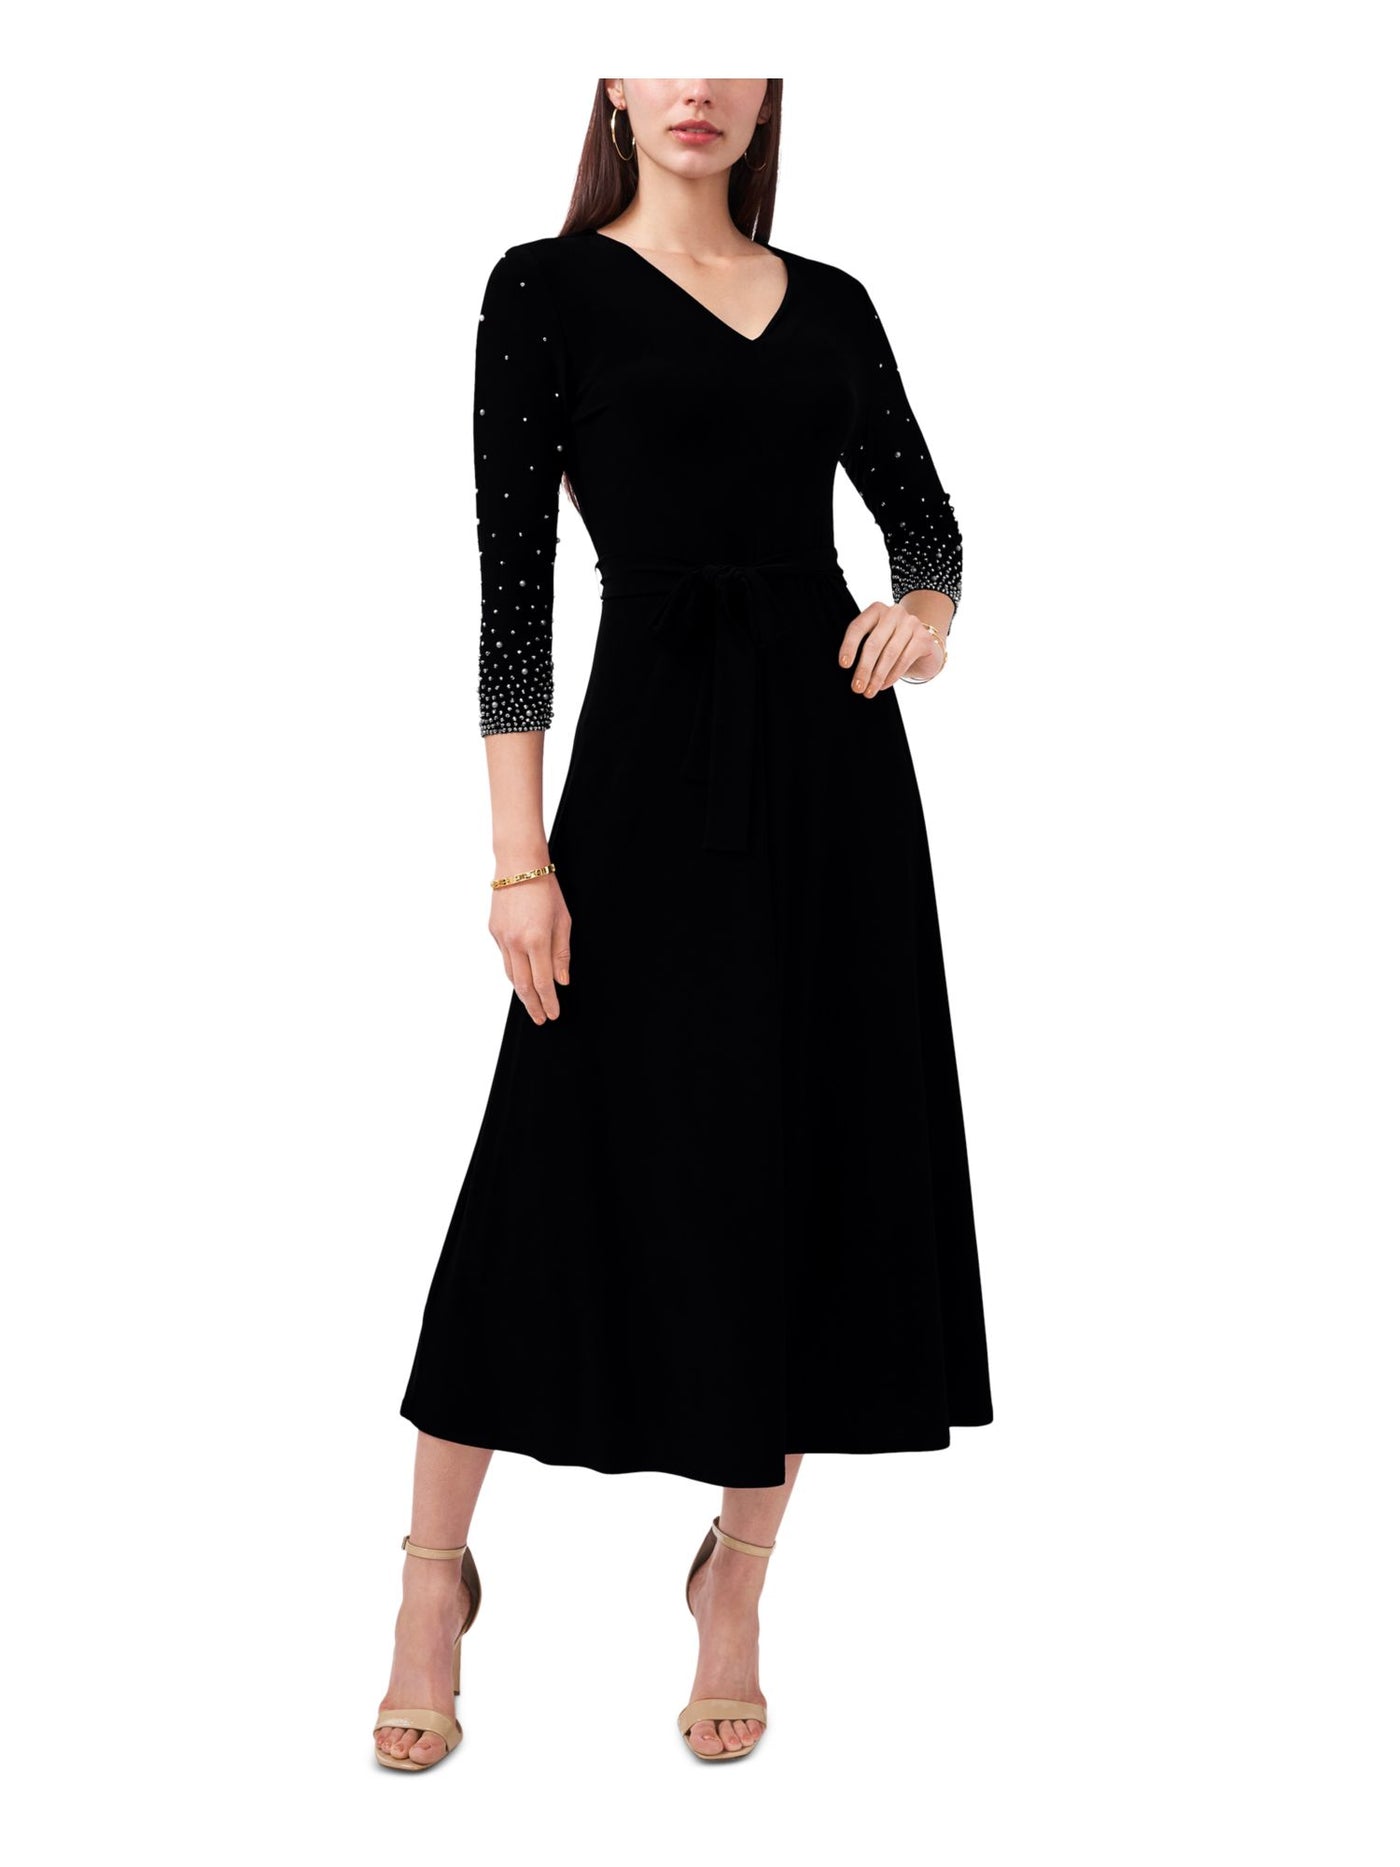 MSK PETITES Womens Black Embellished Belted Pullover 3/4 Sleeve V Neck Midi Party Fit + Flare Dress Petites PM